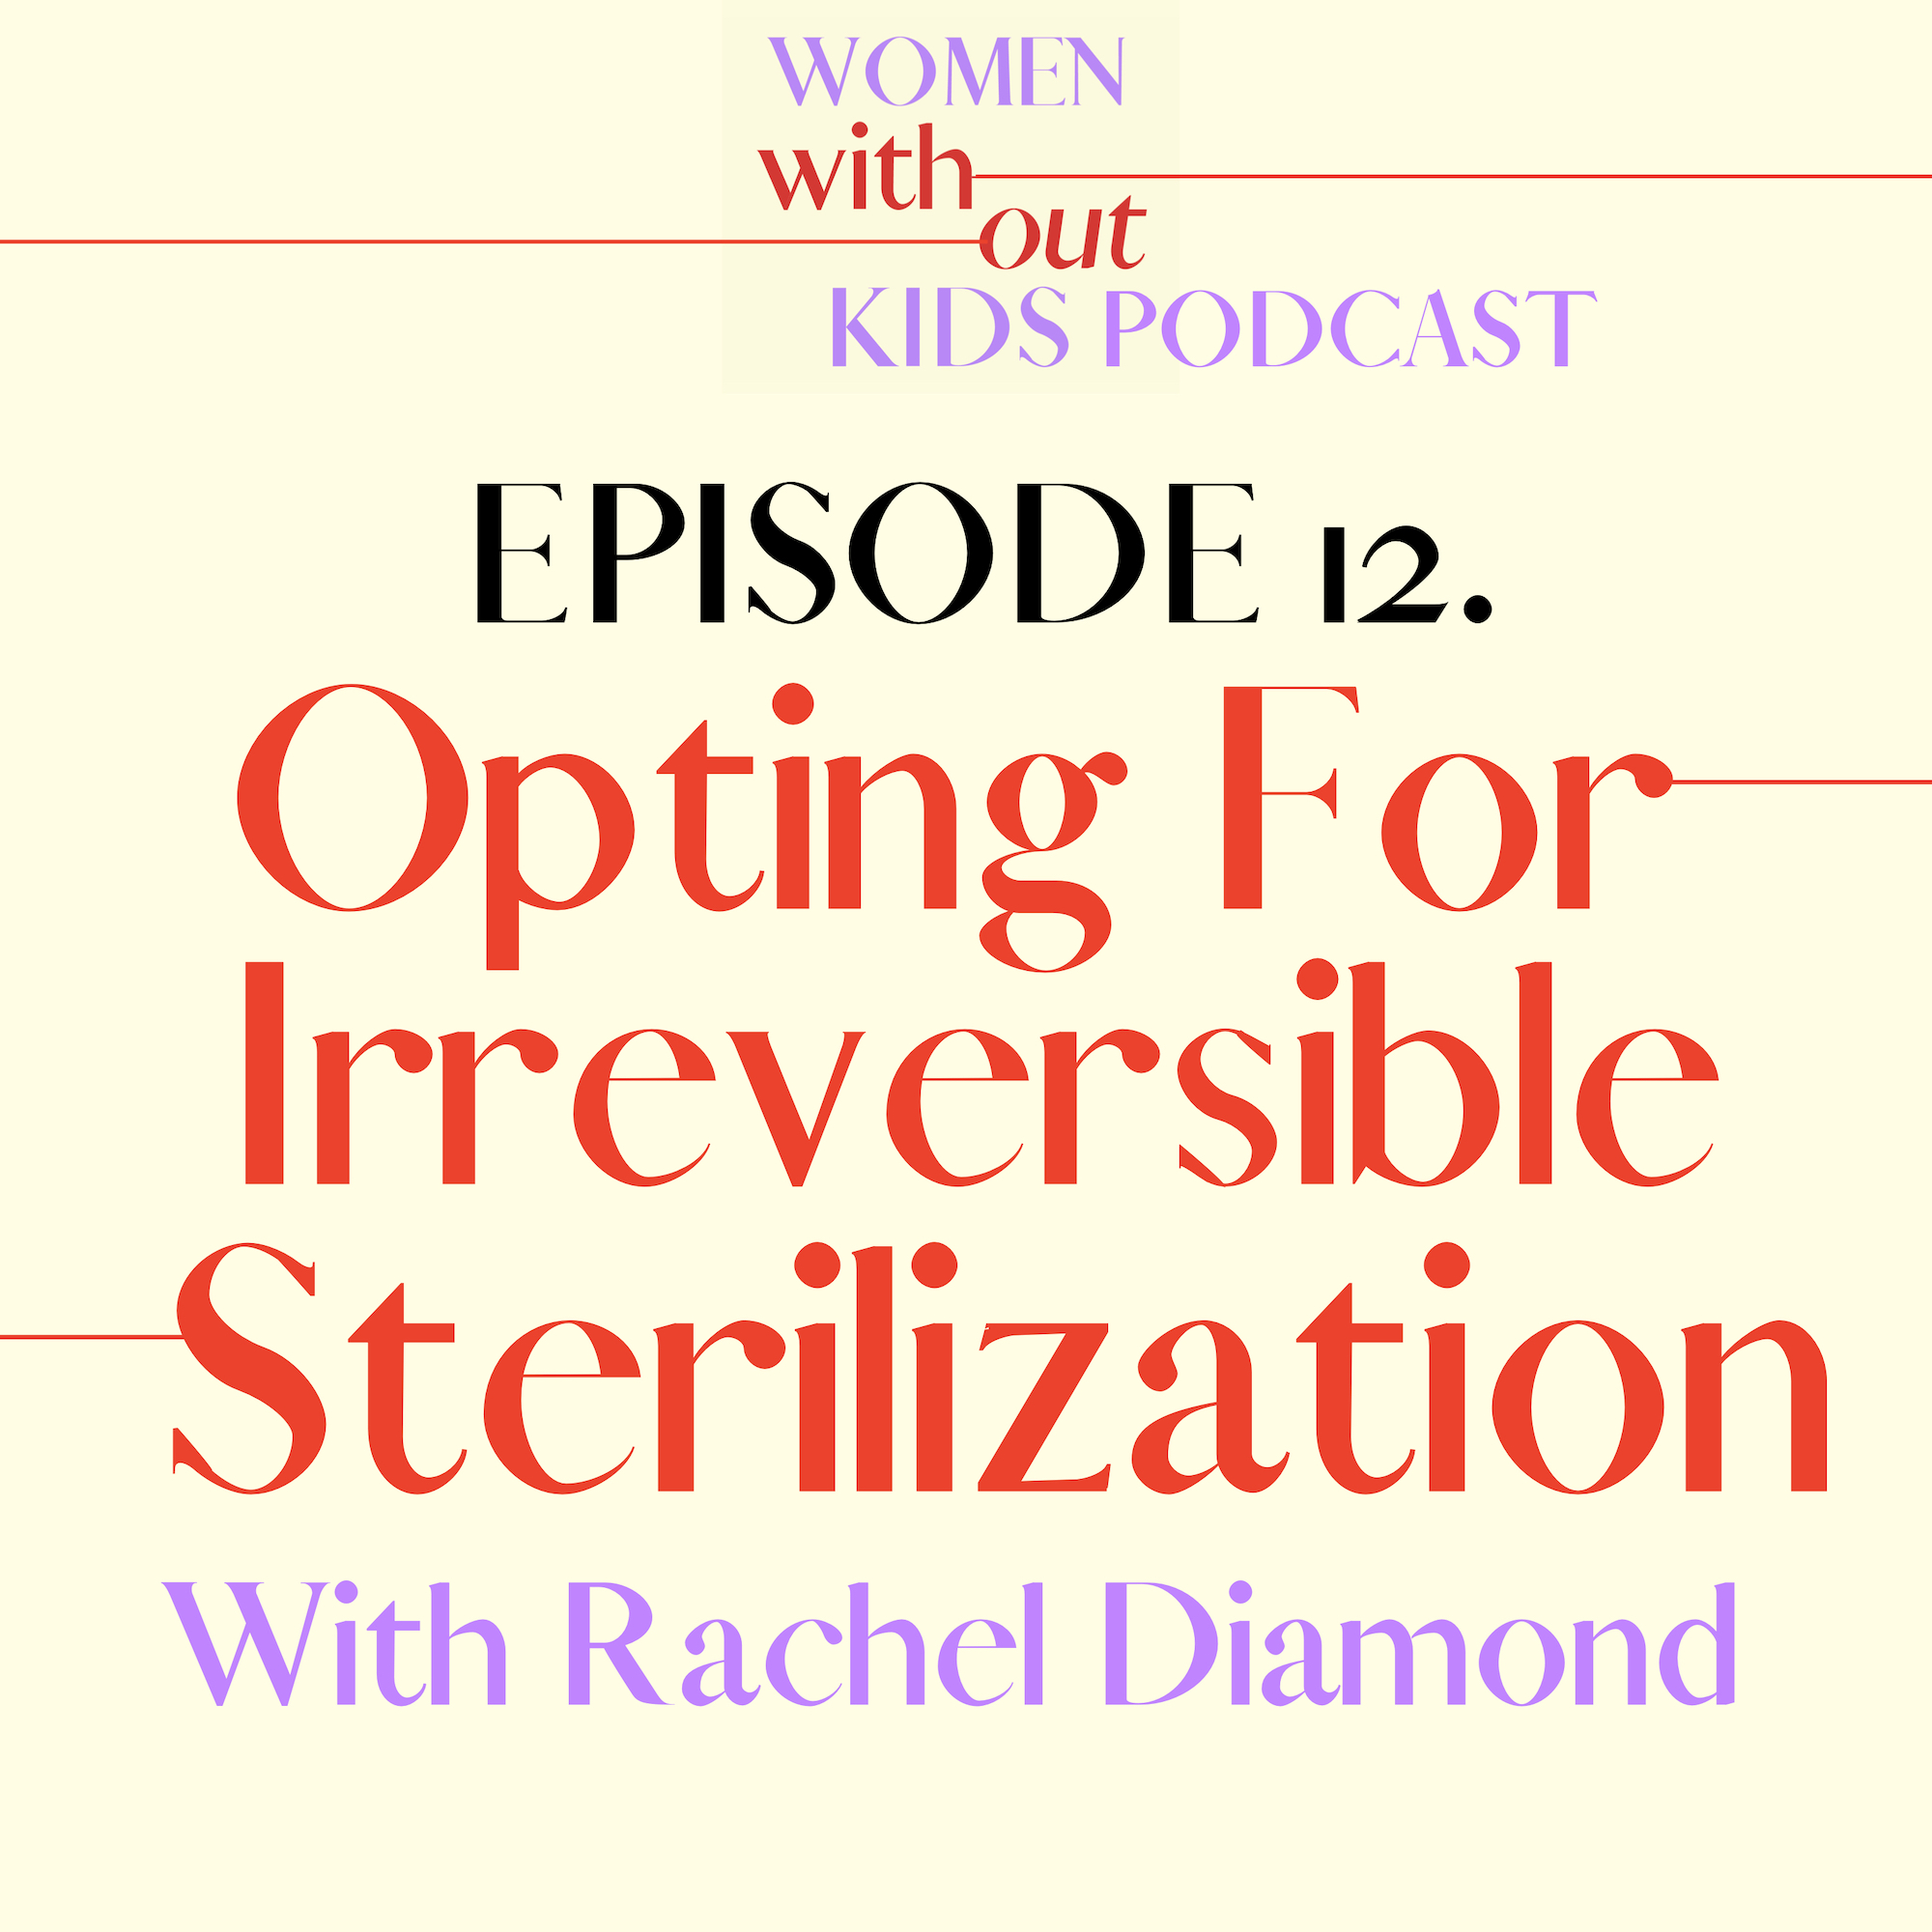 Rachel Diamond bilateral salpingectomy women without kids podcast ruby warrington